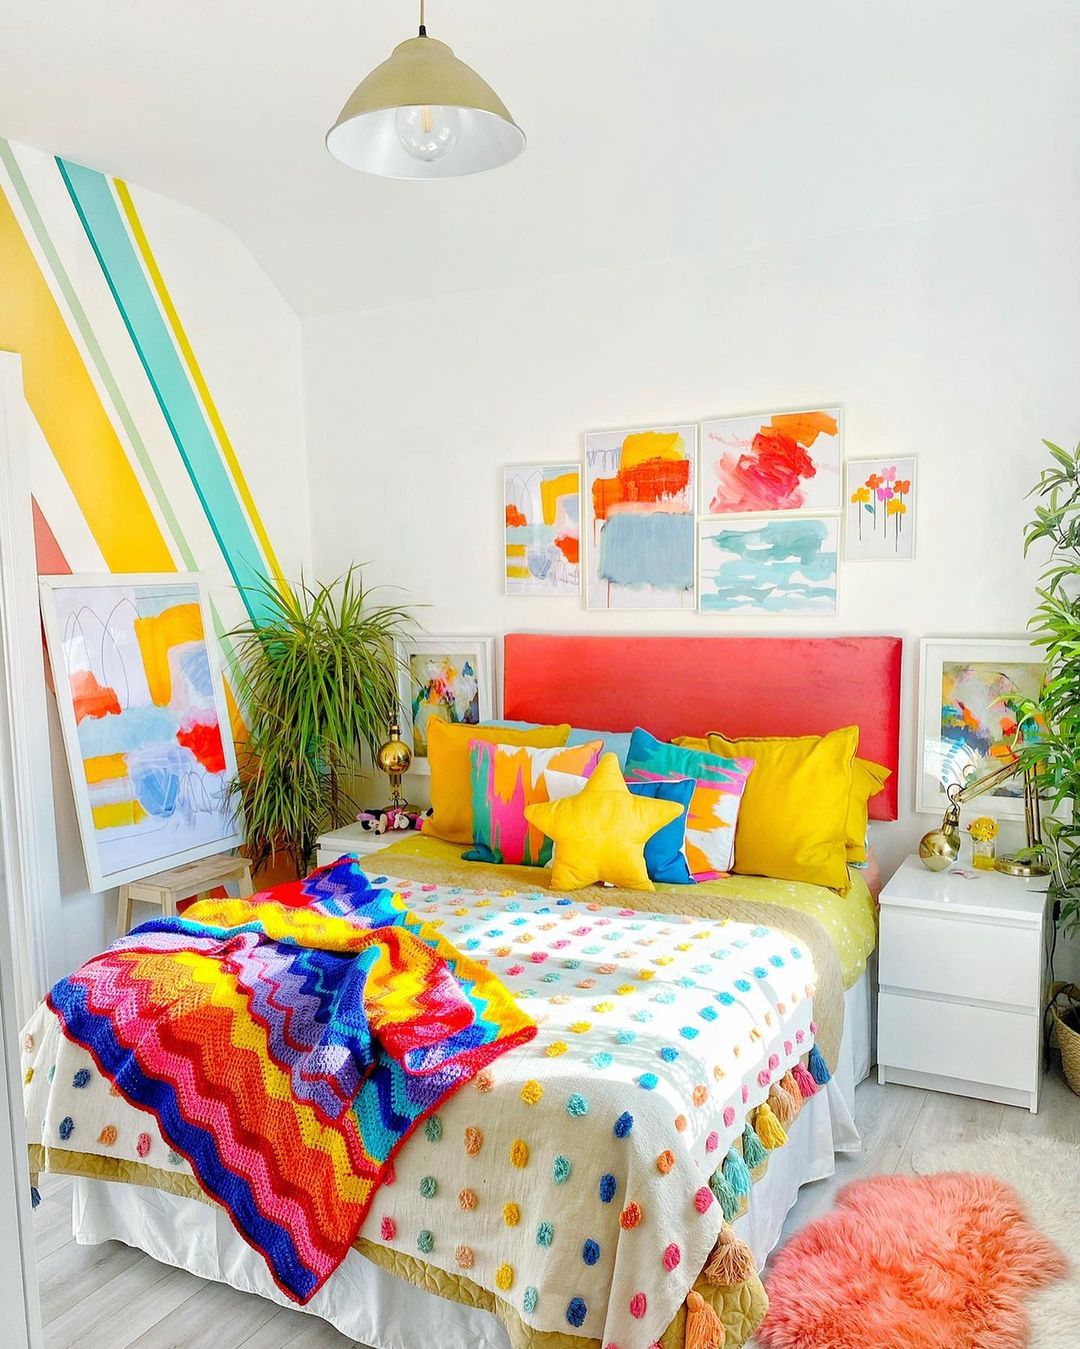 27 Colorful Home Design & Decorating Ideas